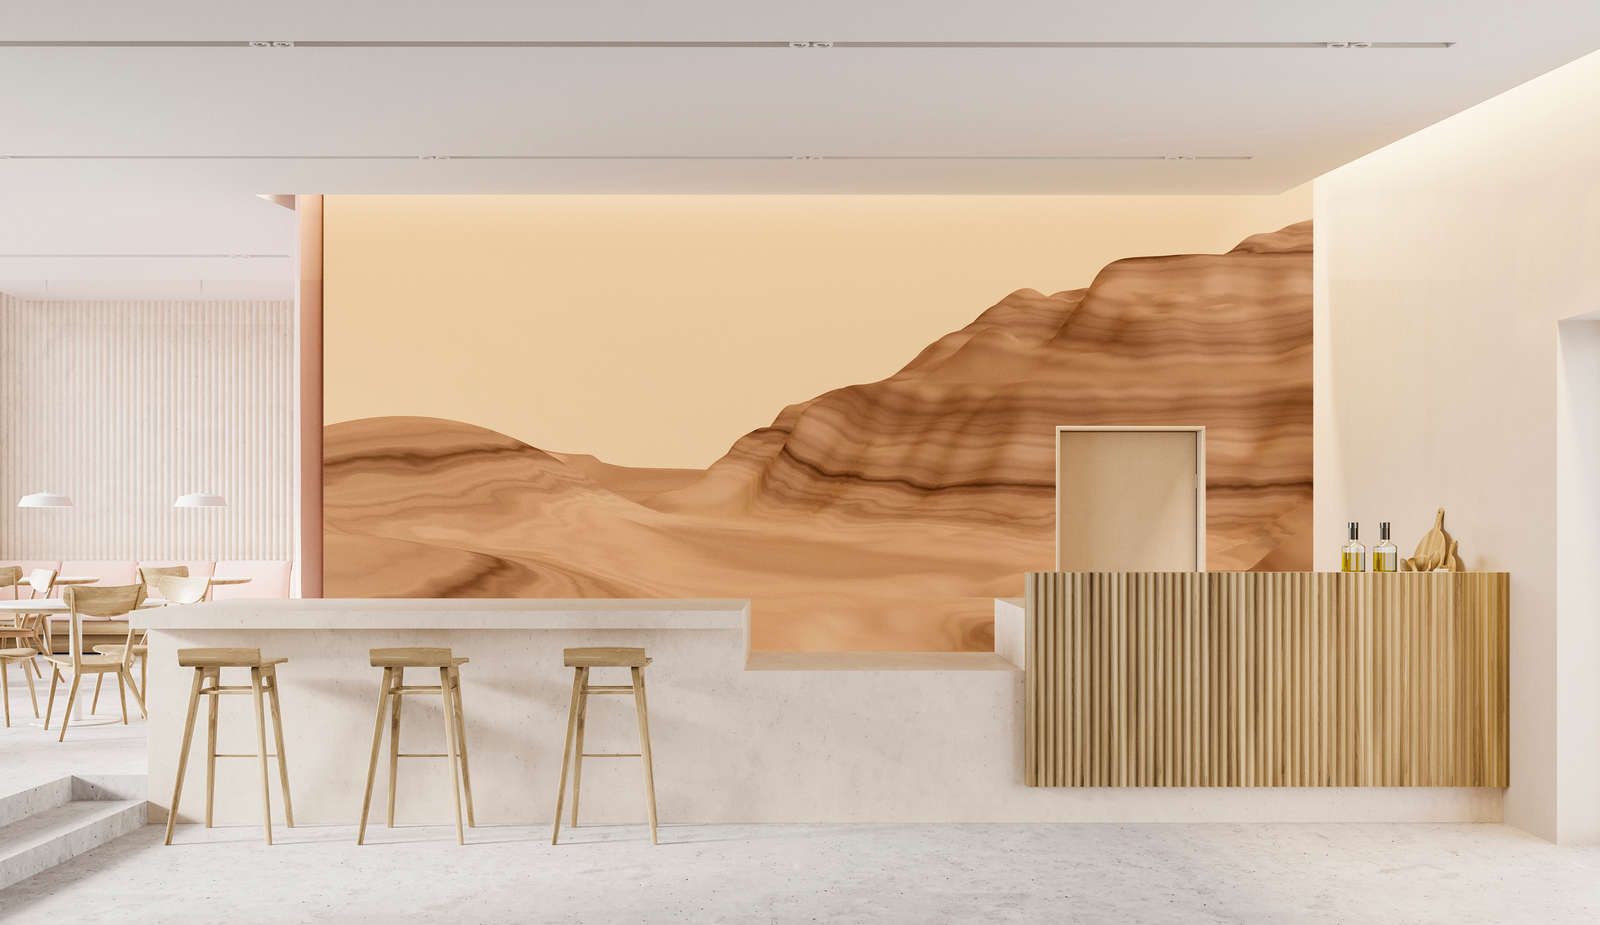             Photo wallpaper »luke« - Abstract desert landscape - Smooth, slightly shiny premium non-woven fabric
        